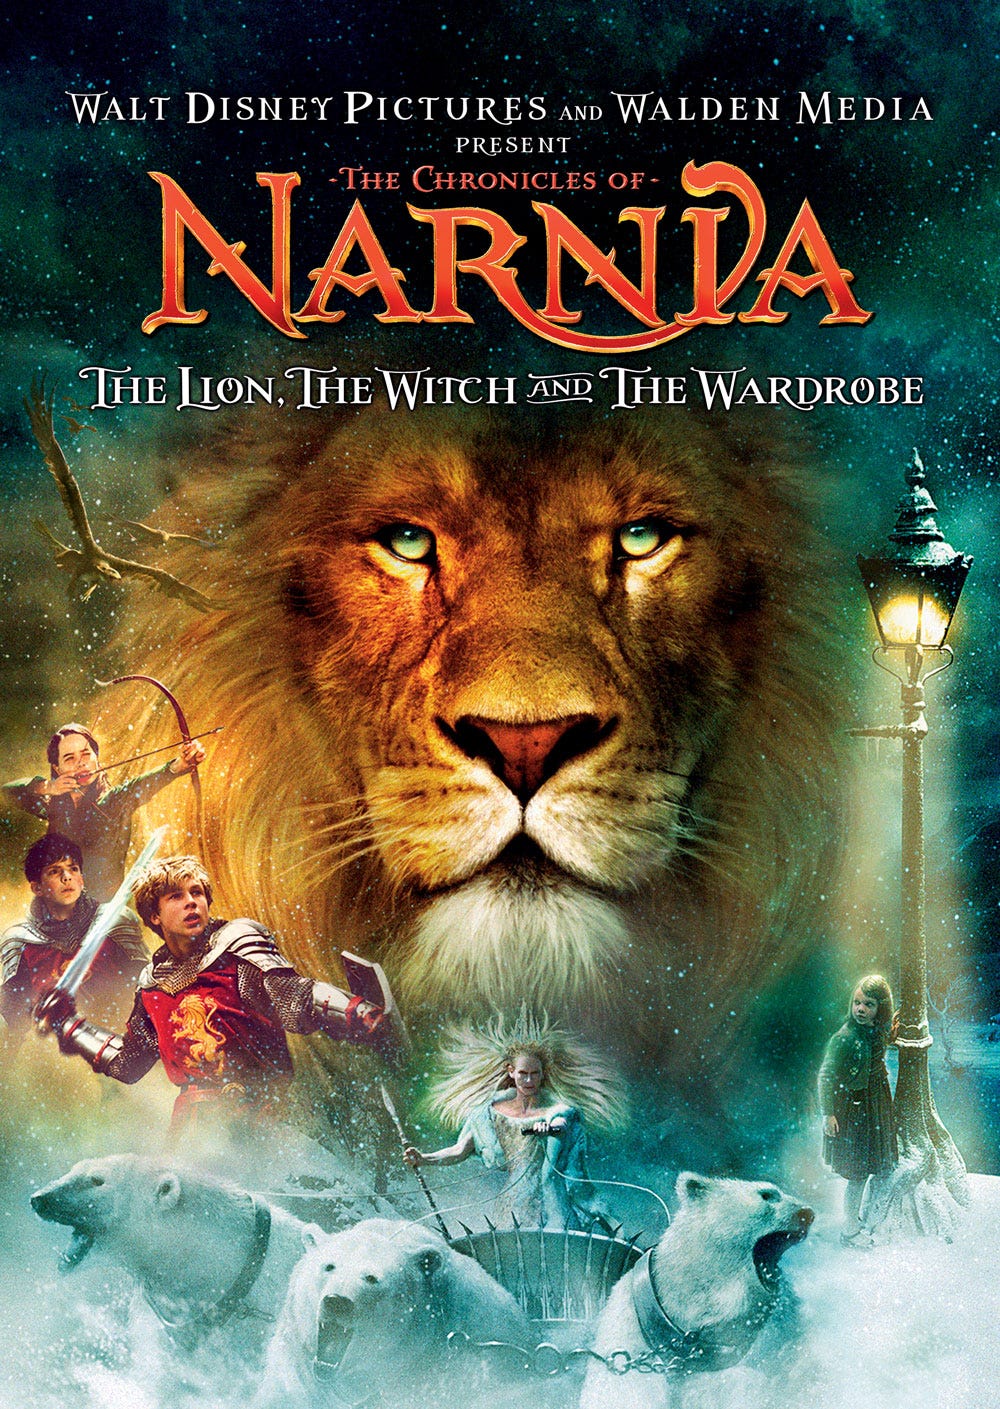 Are the Chronicles of 'Narnia' Pure Christian Propaganda?